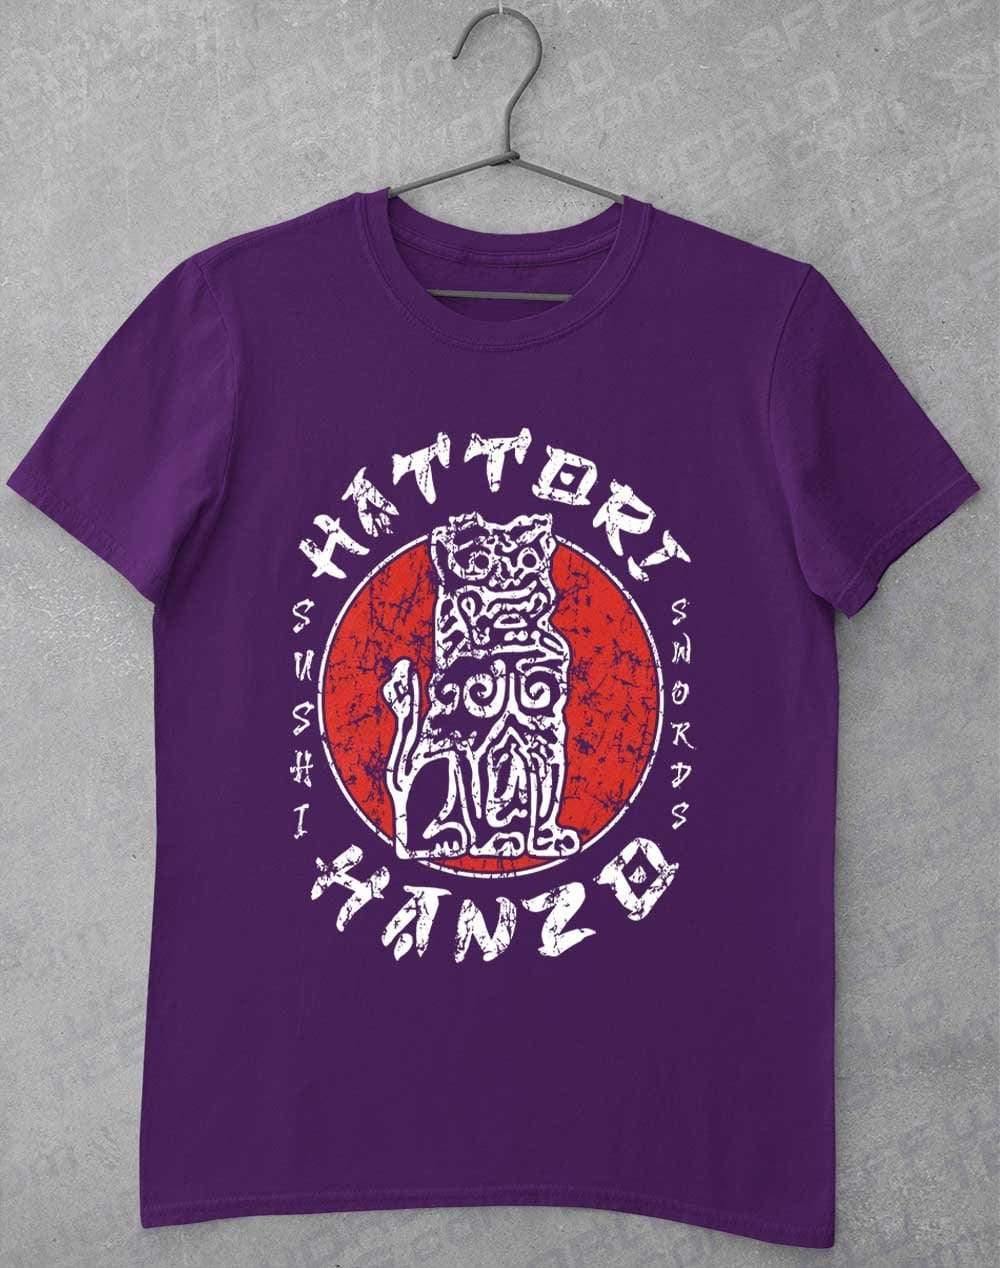 Hattori Hanzo T-Shirt S / Purple  - Off World Tees